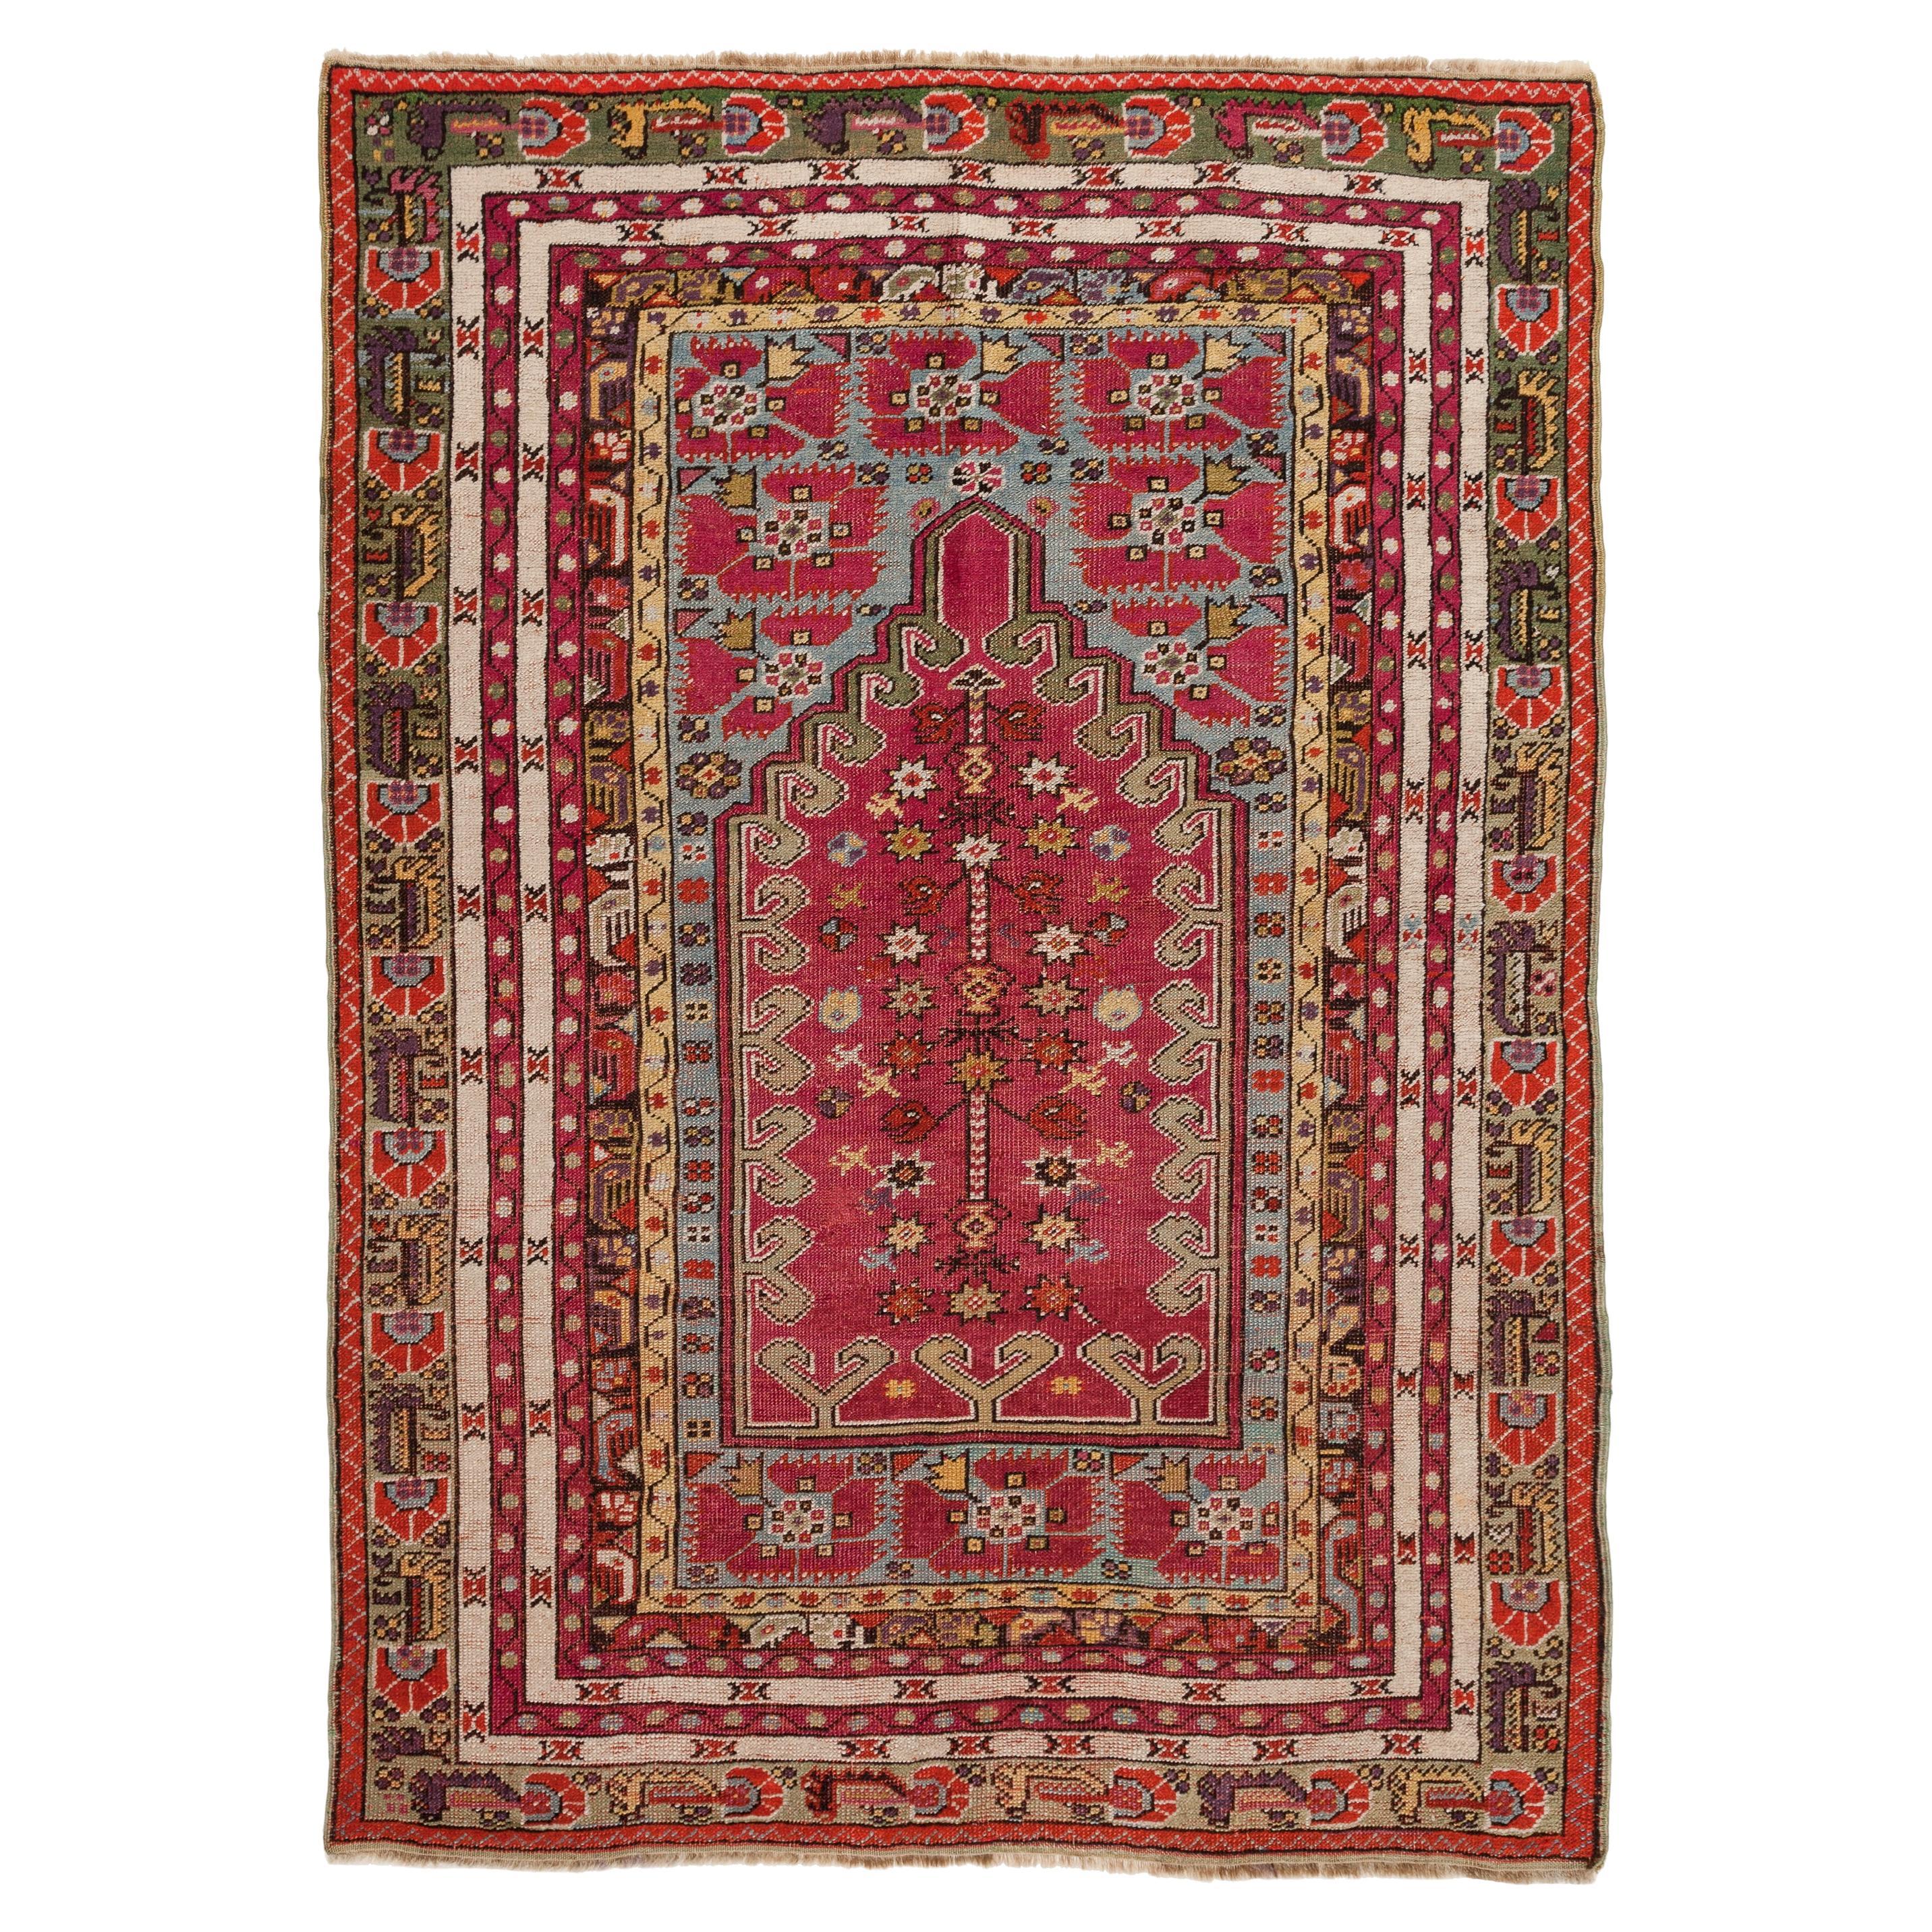 Antique Mucur 'Mudjar / Mujur' Prayer Rug, Turkish Central Anatolian Carpet For Sale